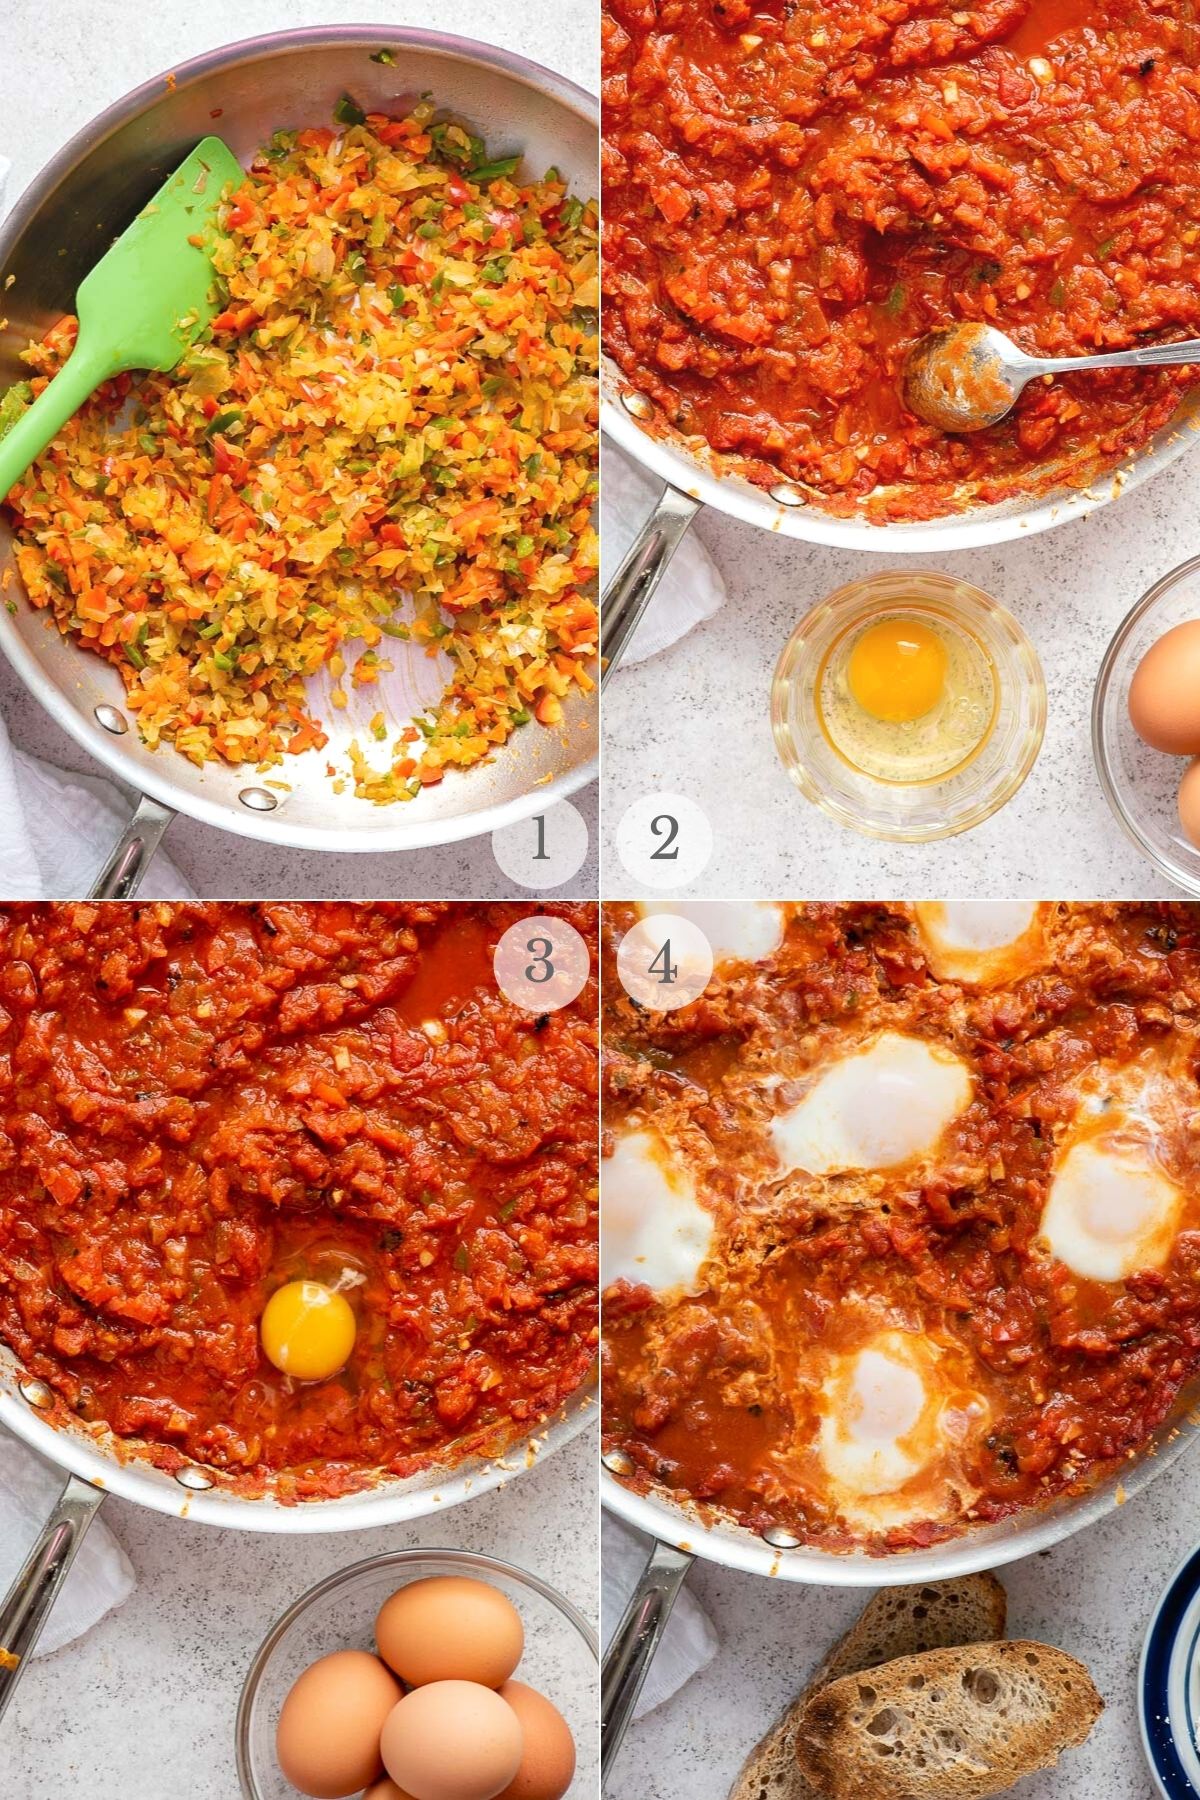 shakshuka recipe steps 1-4 photo collage